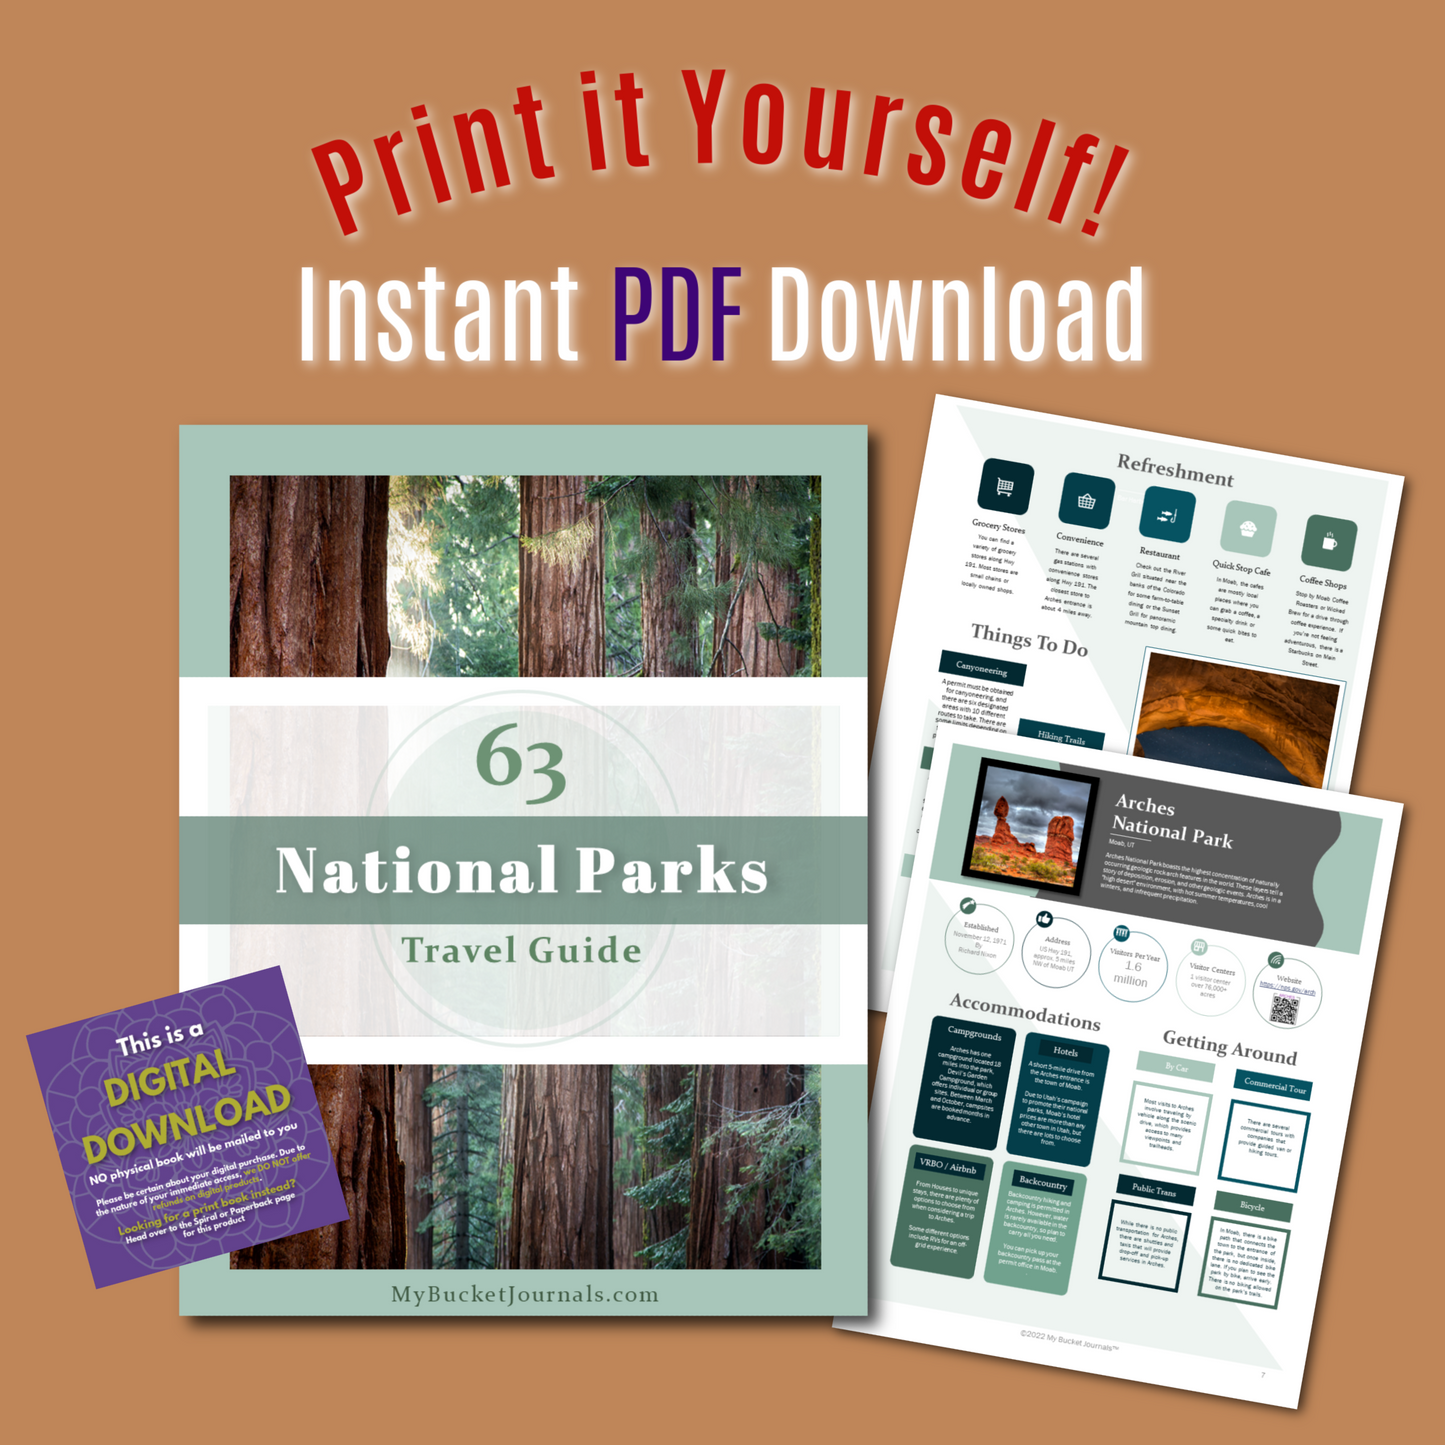 National Park Bucket Journal 2024 Edition